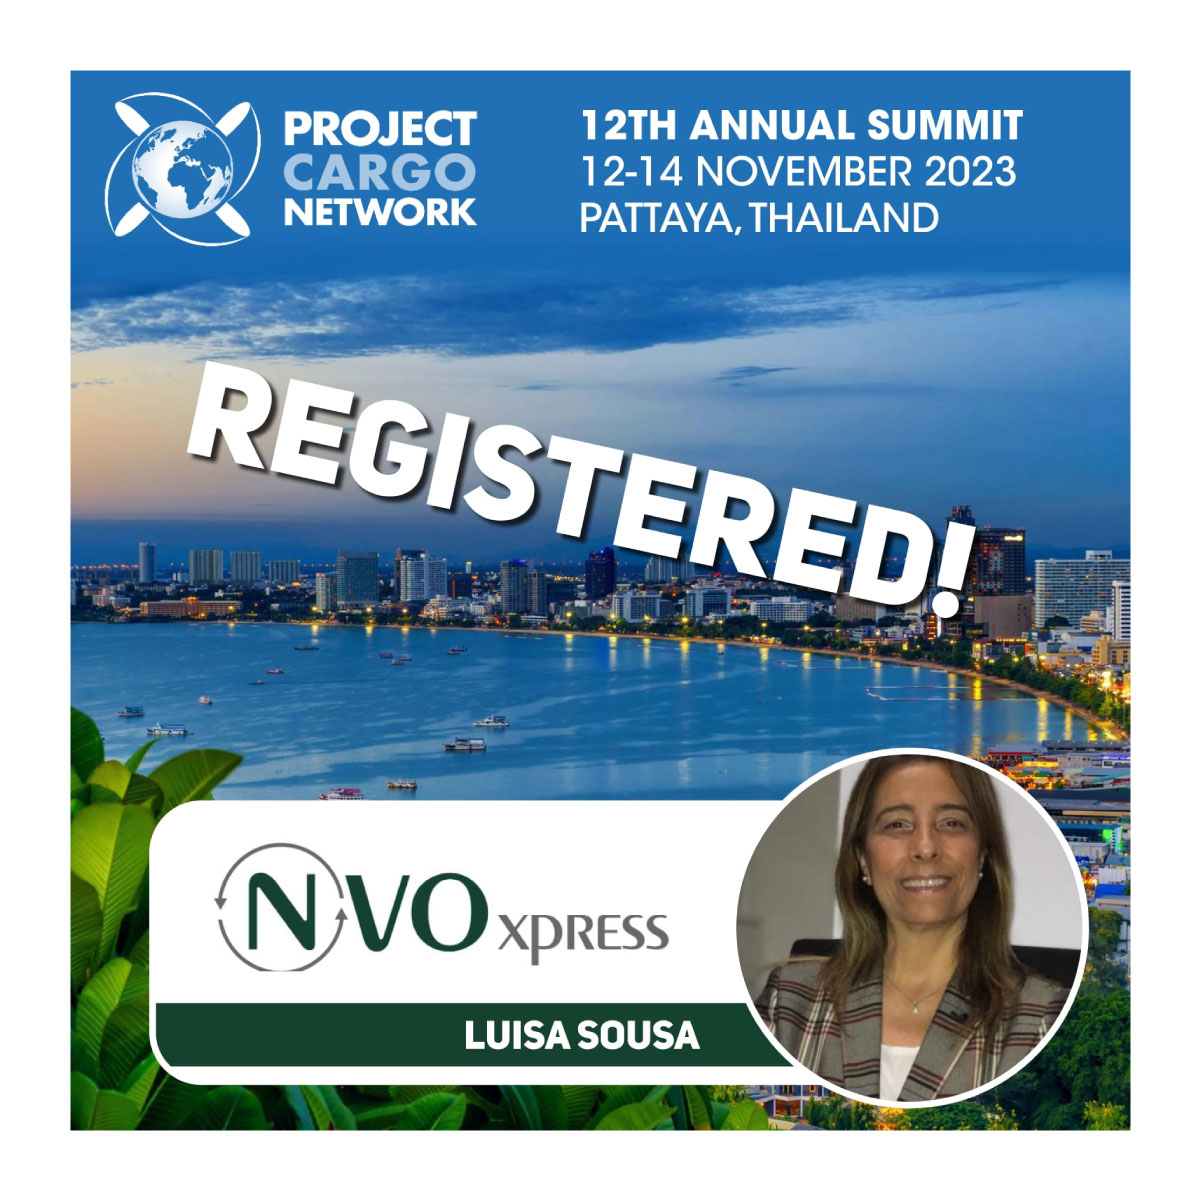 NVOxpress marcou presença na 12.ª Conferência Anual da Project Cargo Network.